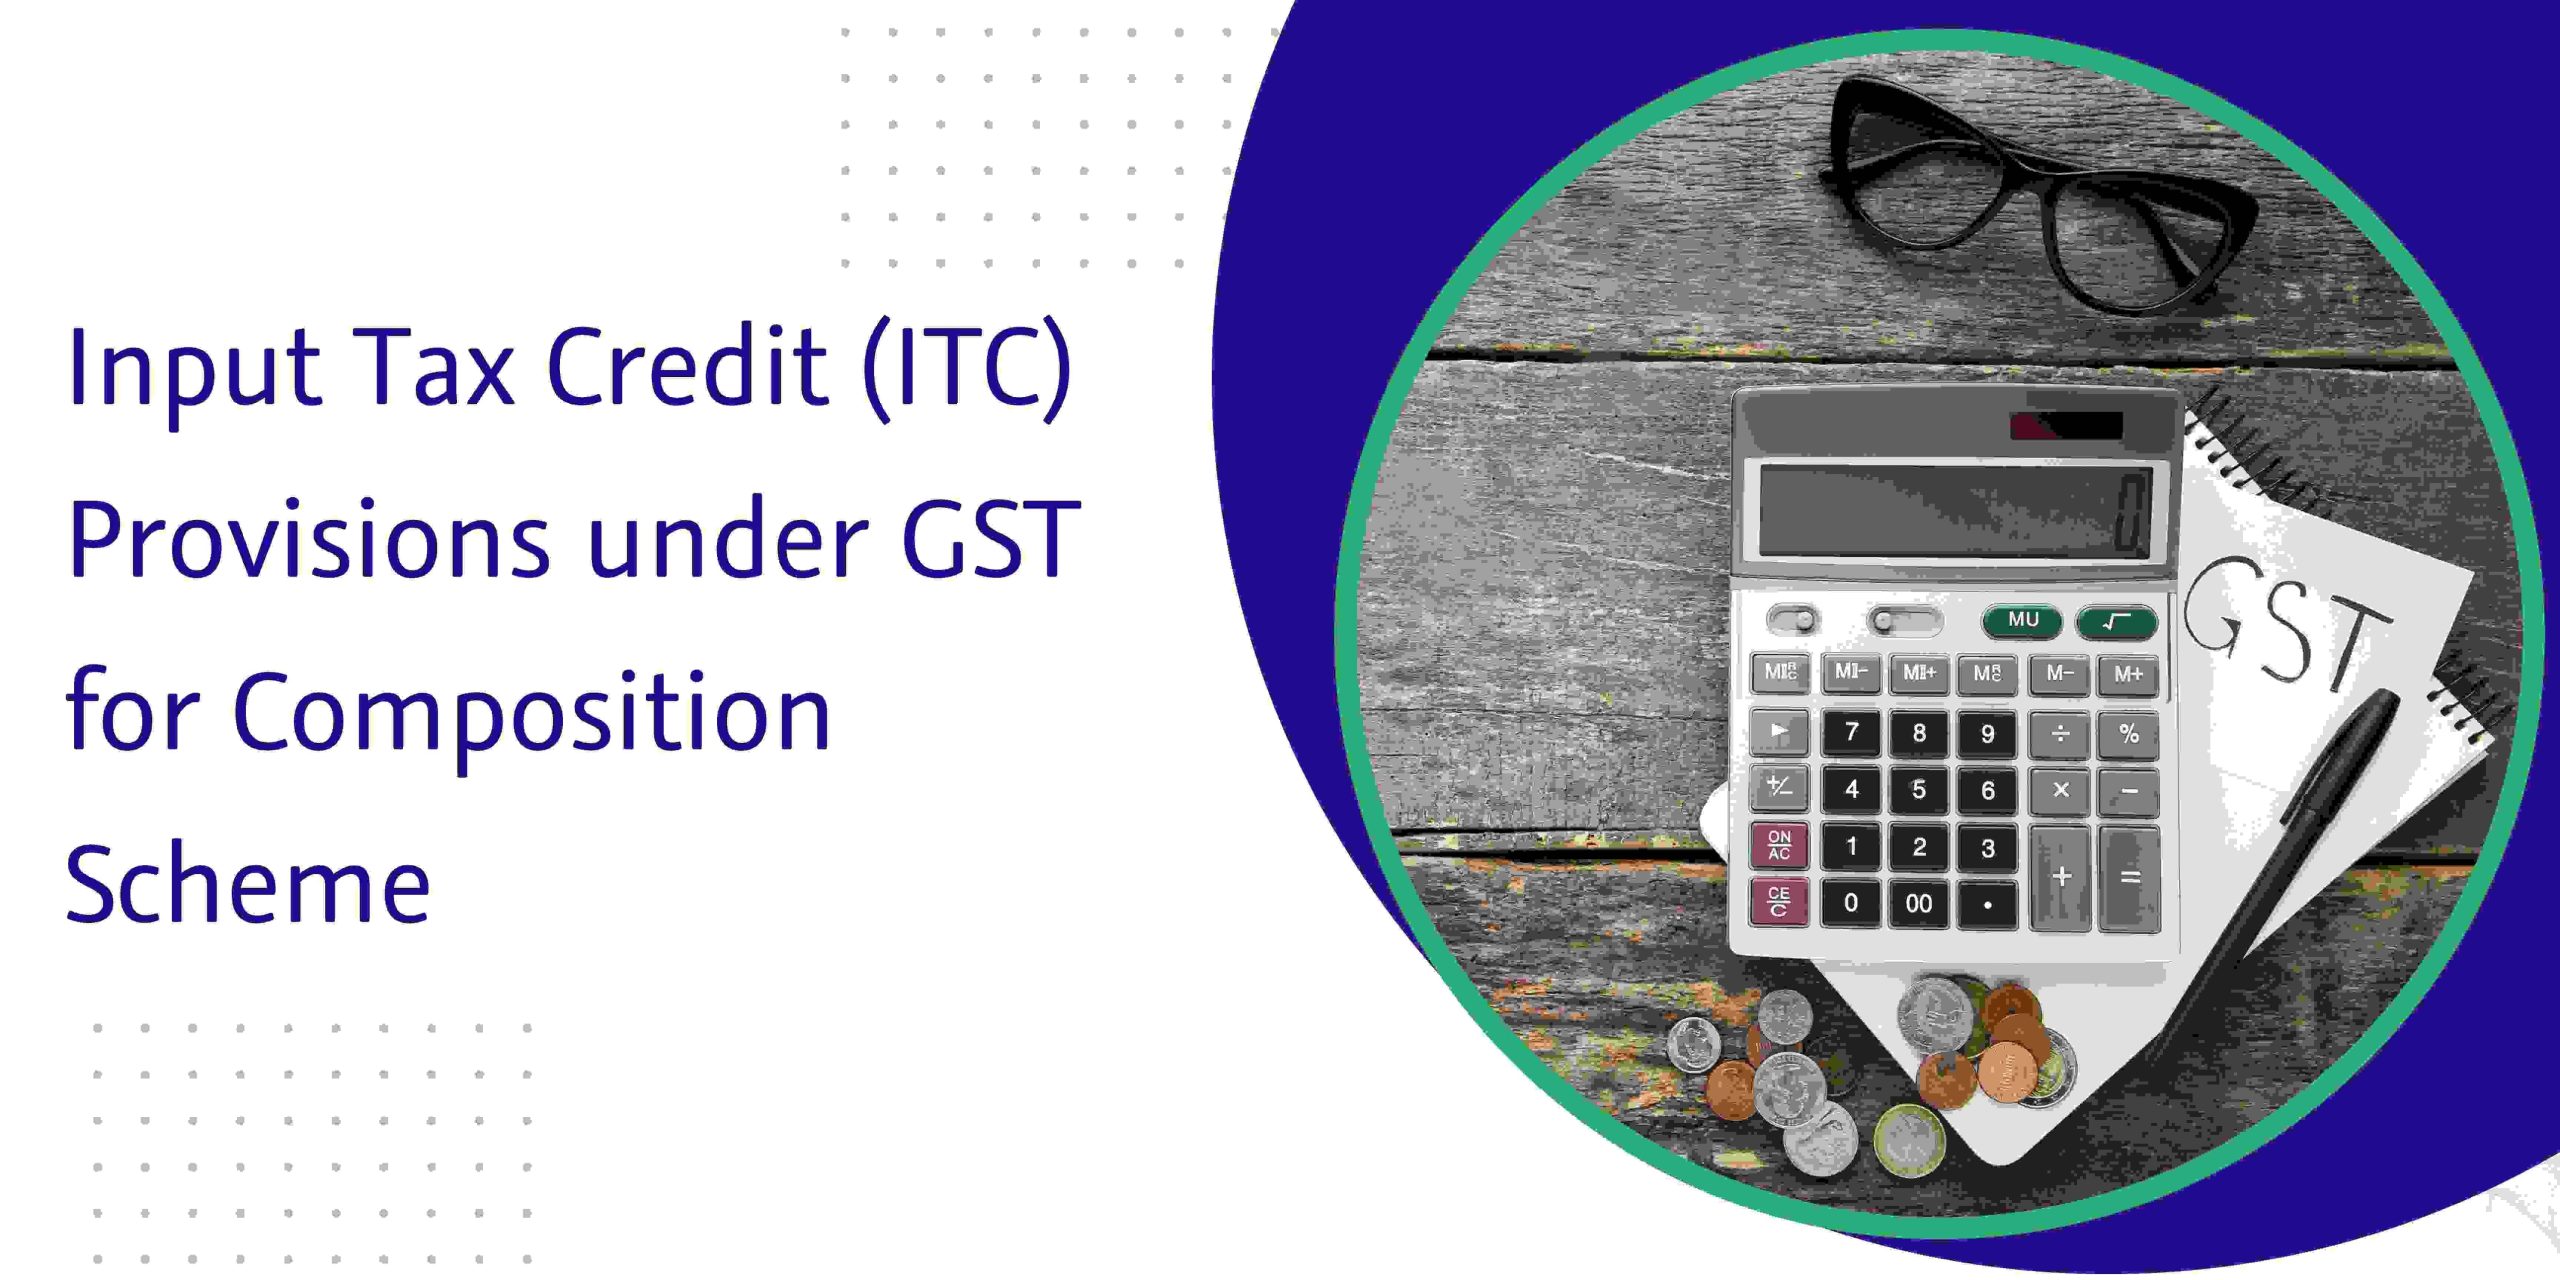 CaptainBiz: Input Tax Credit (ITC) Provisions in GSTR-4